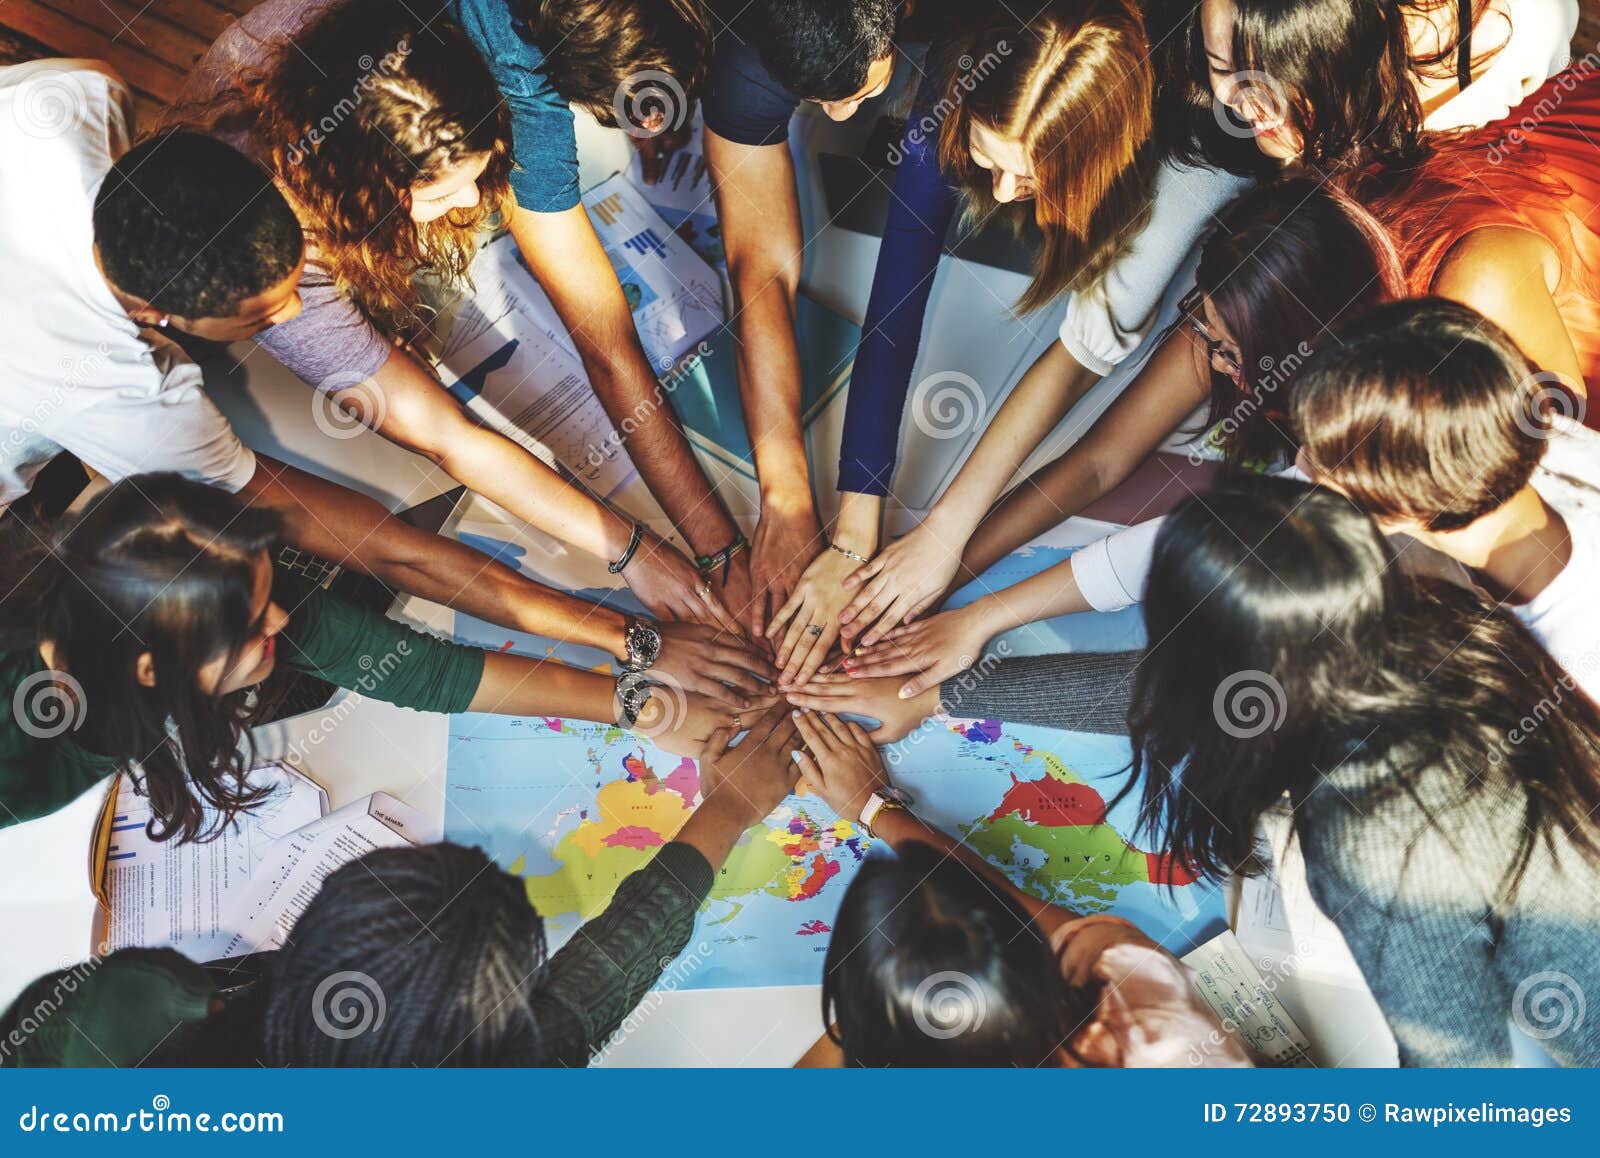 classmate solidarity team group community concept